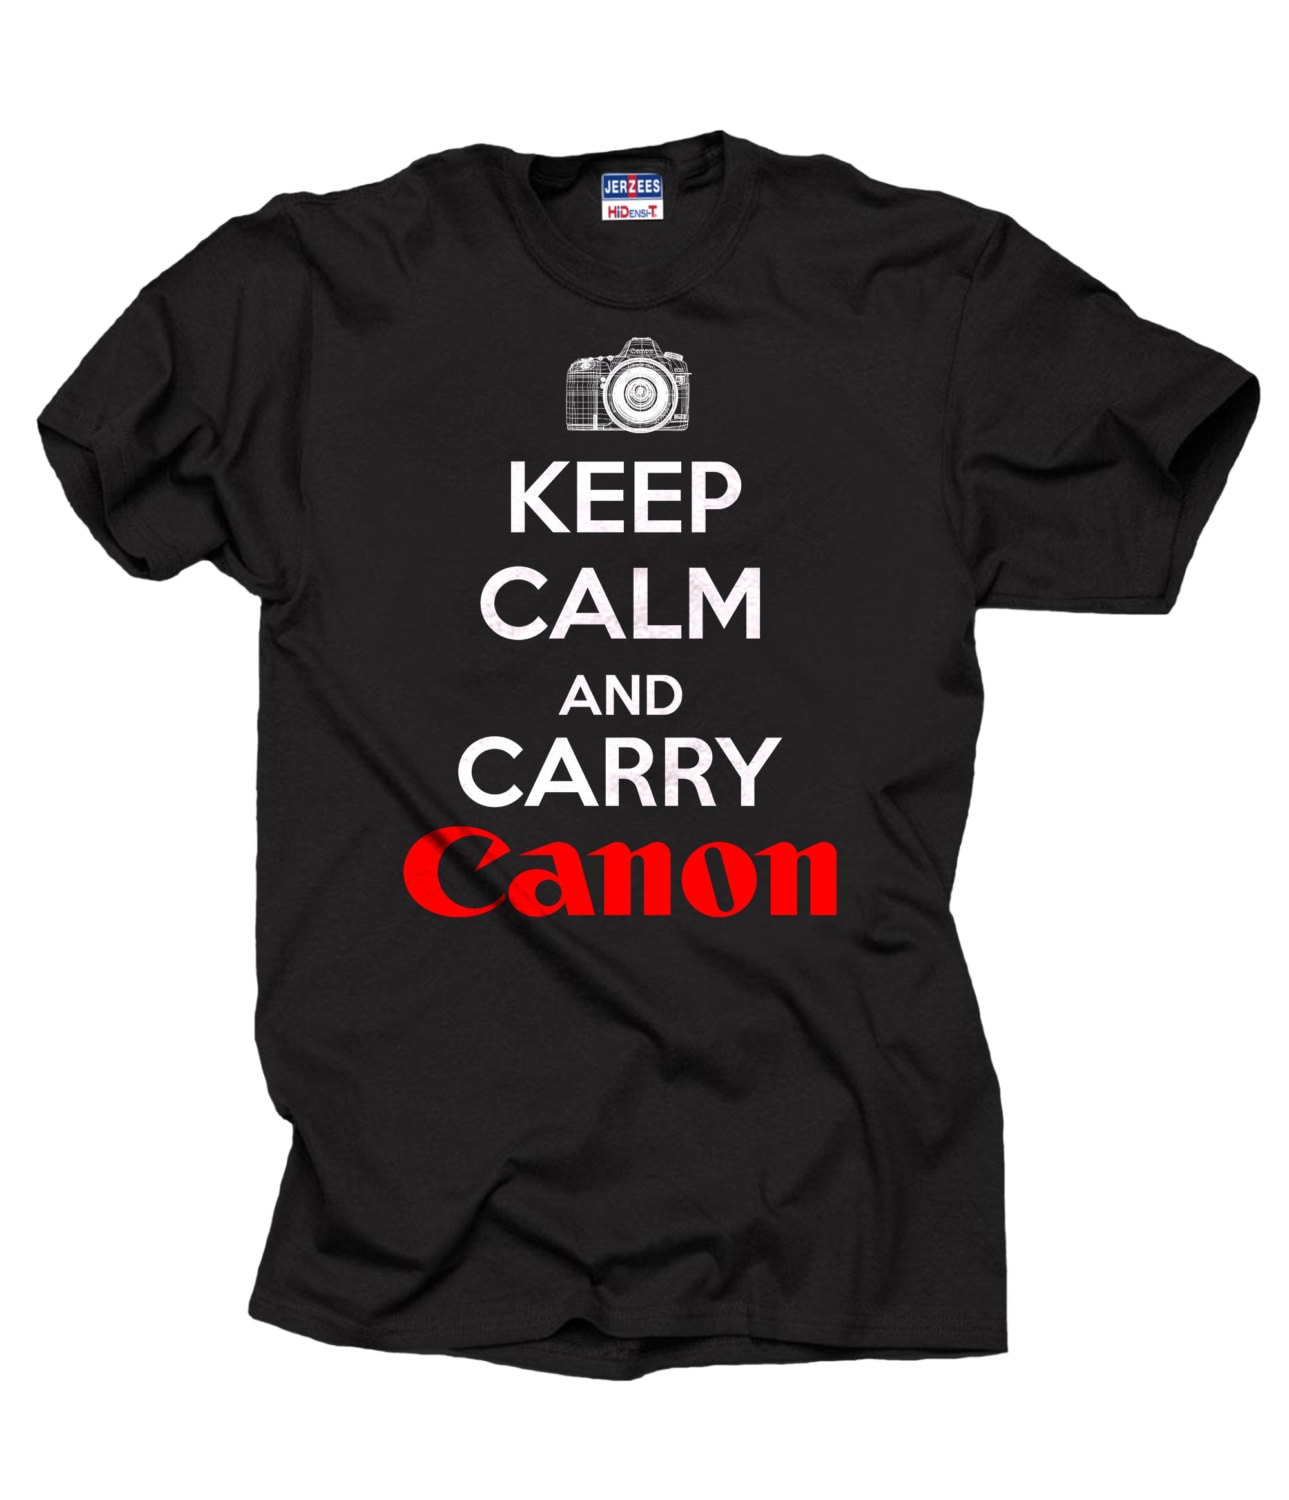 As Unterseite Verschluss canon shirt Coupon Rahmen tatsächlich